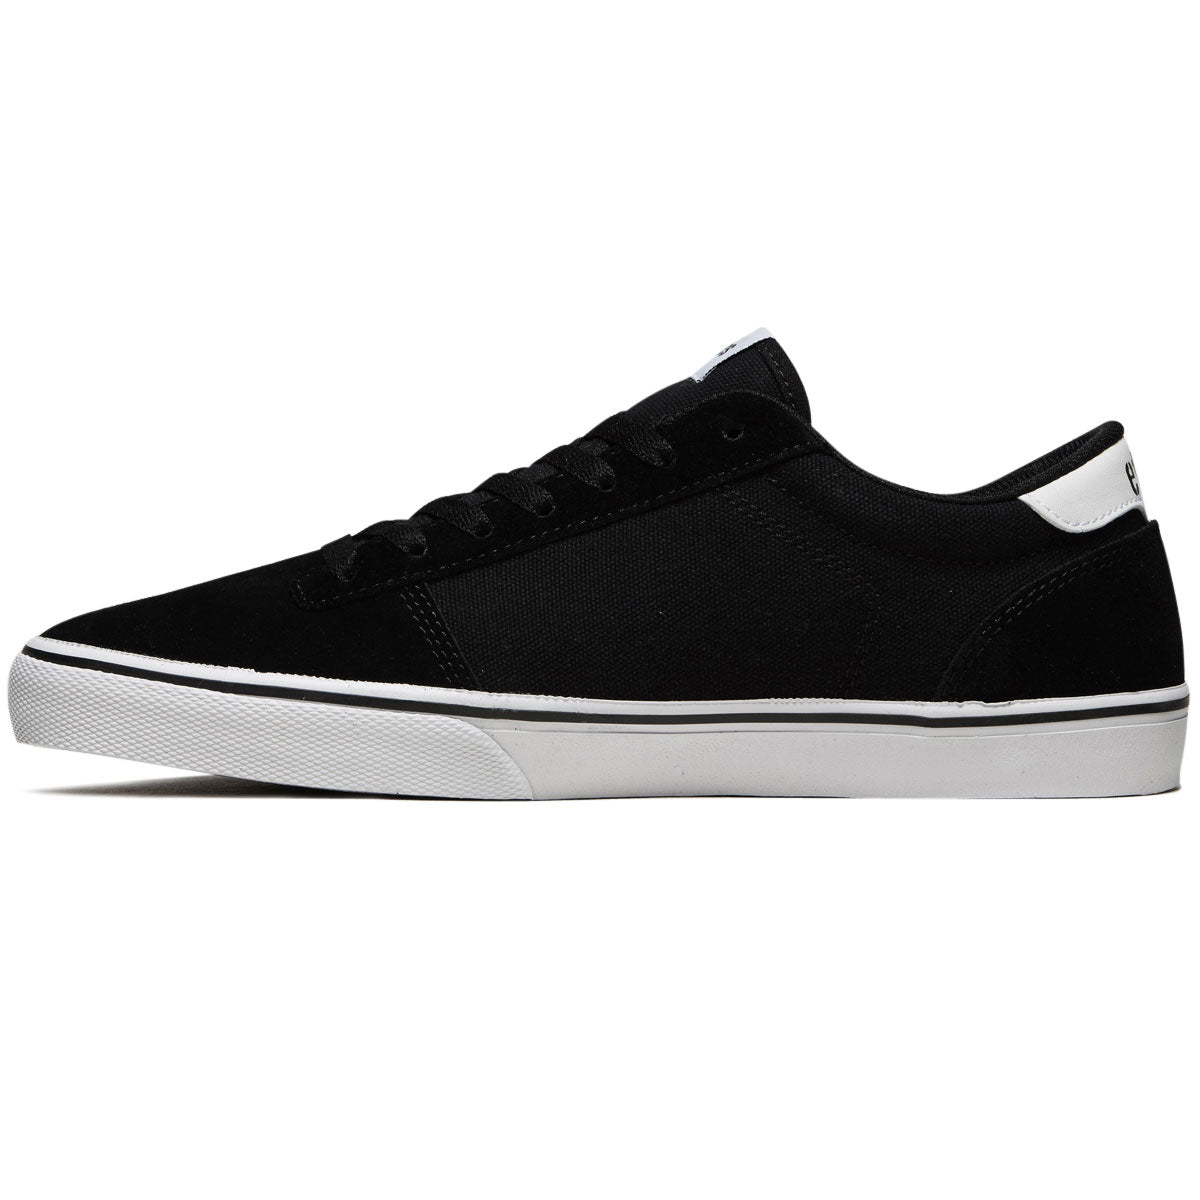 Etnies Calli Vulc Shoes - Black/White image 2